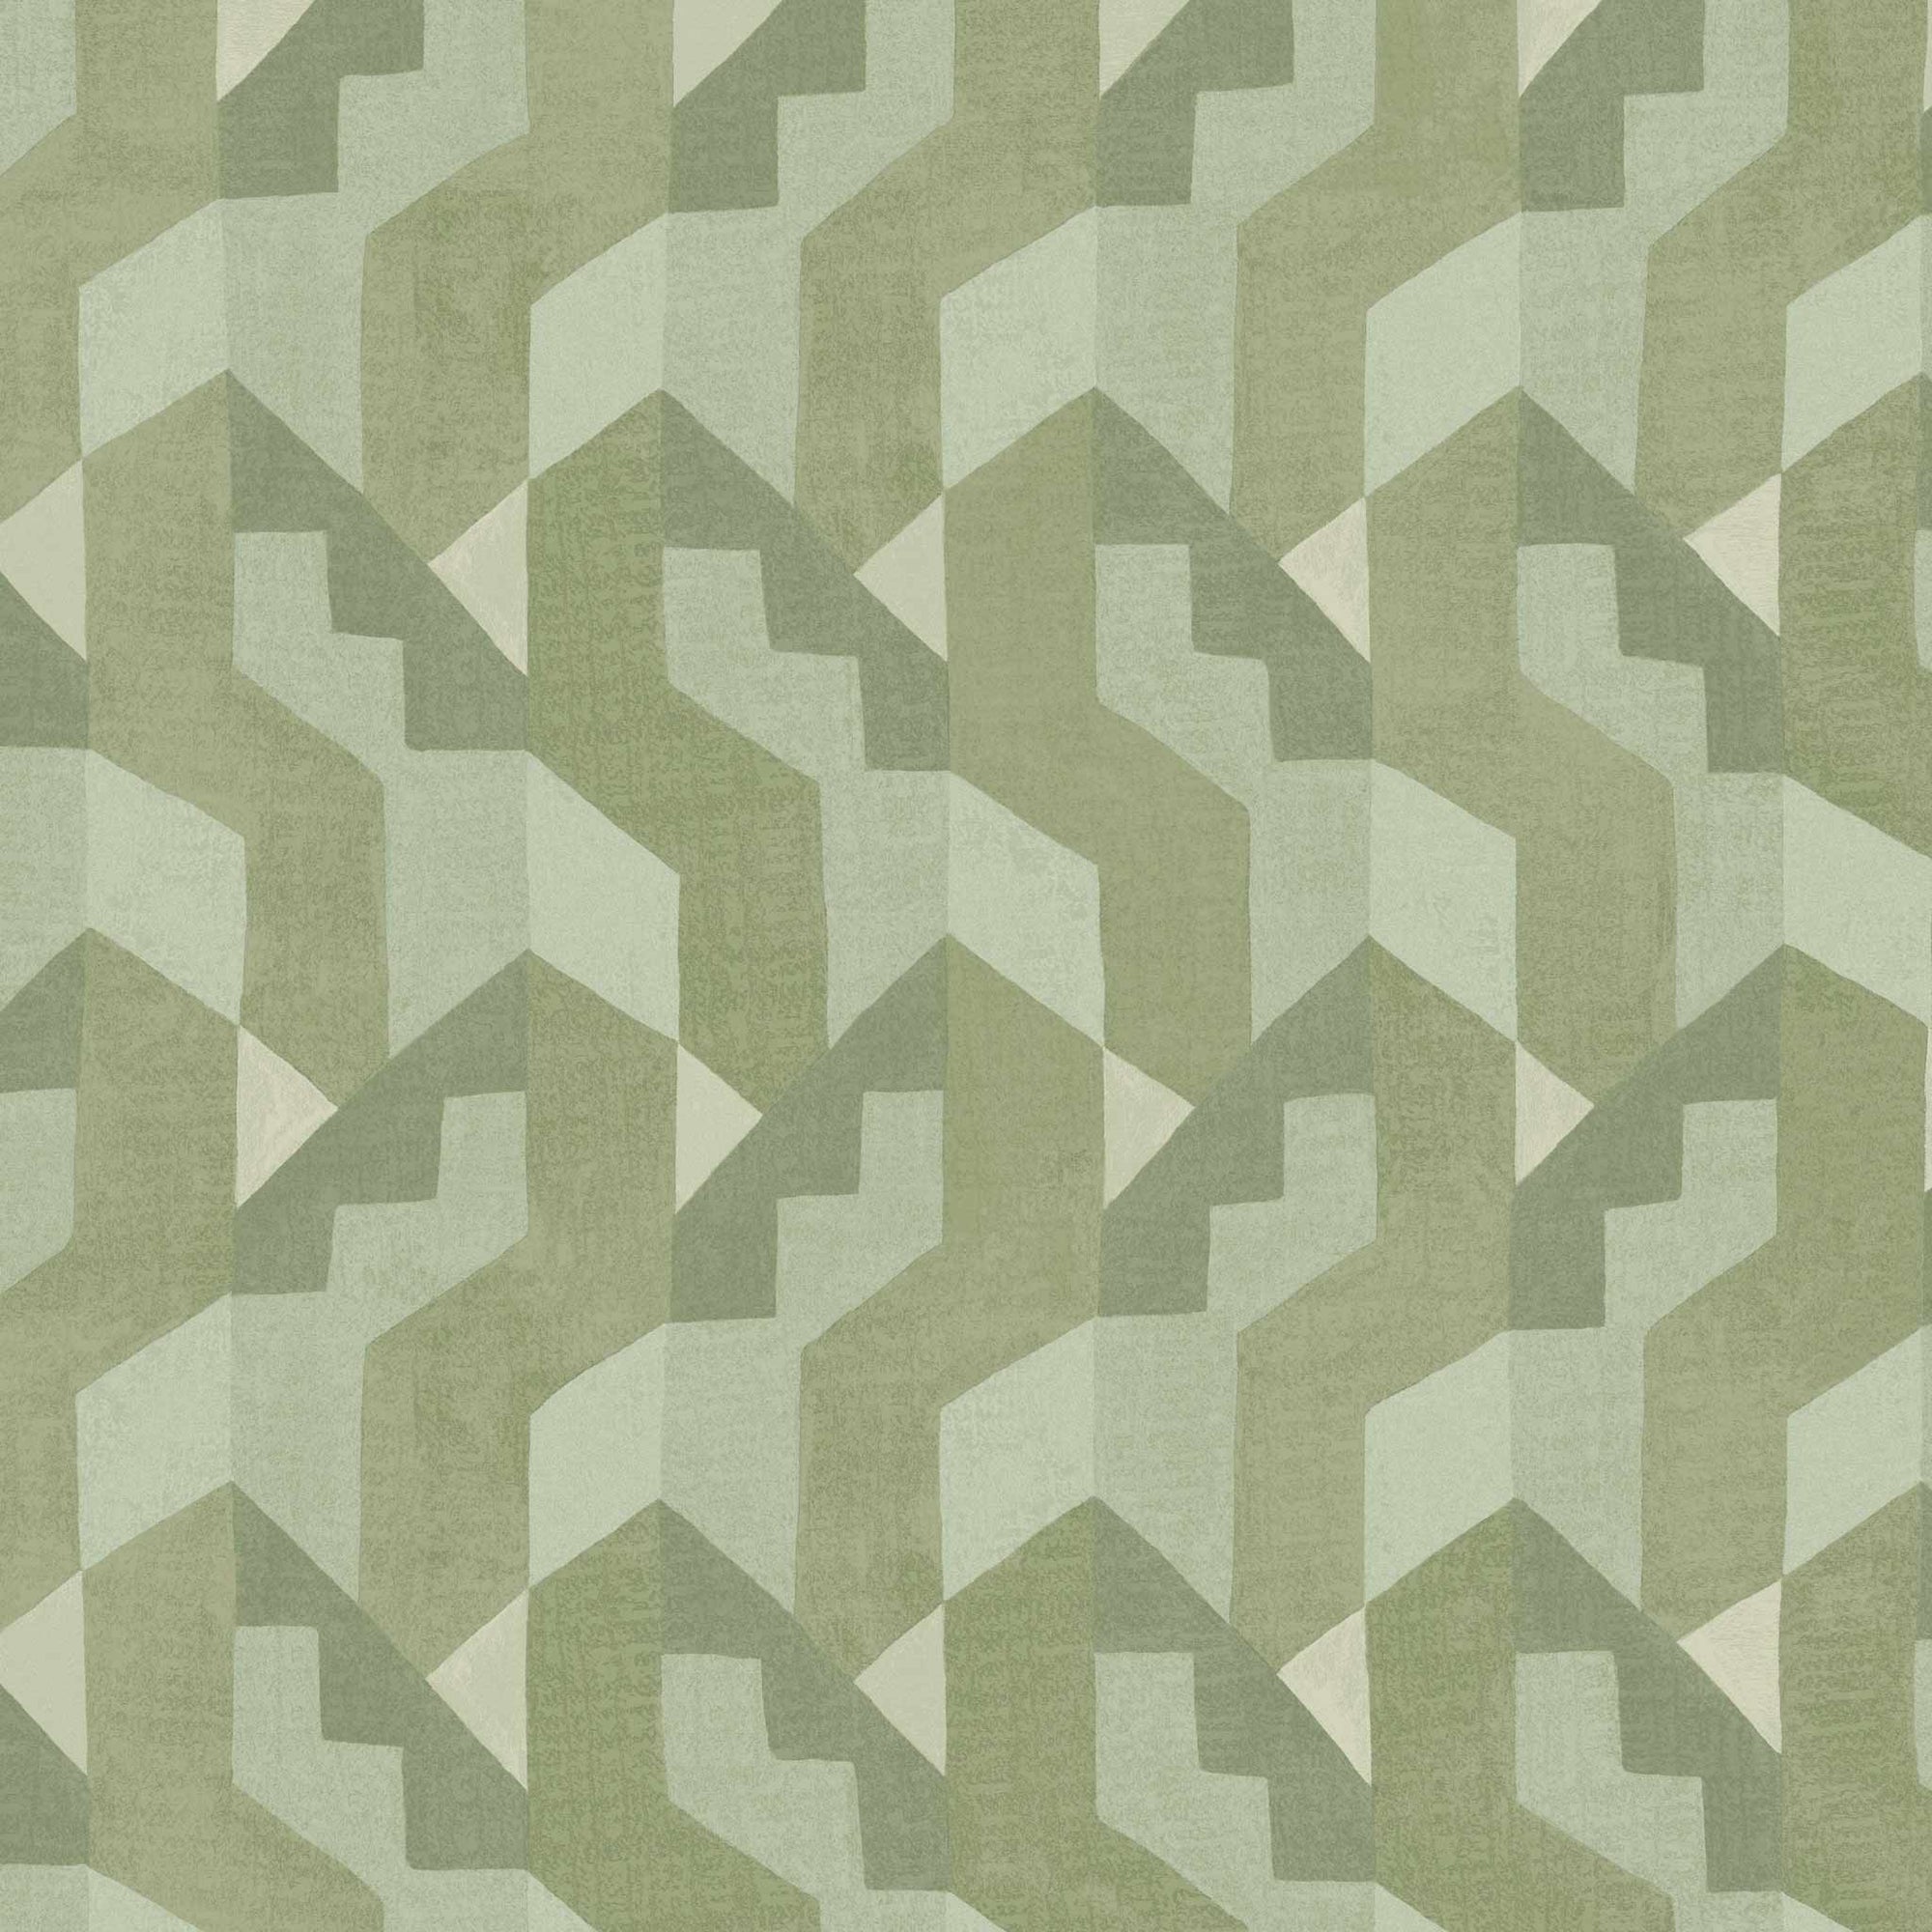 Habita wallpaper design - green Gio grasscloth pattern in Eucalyptus